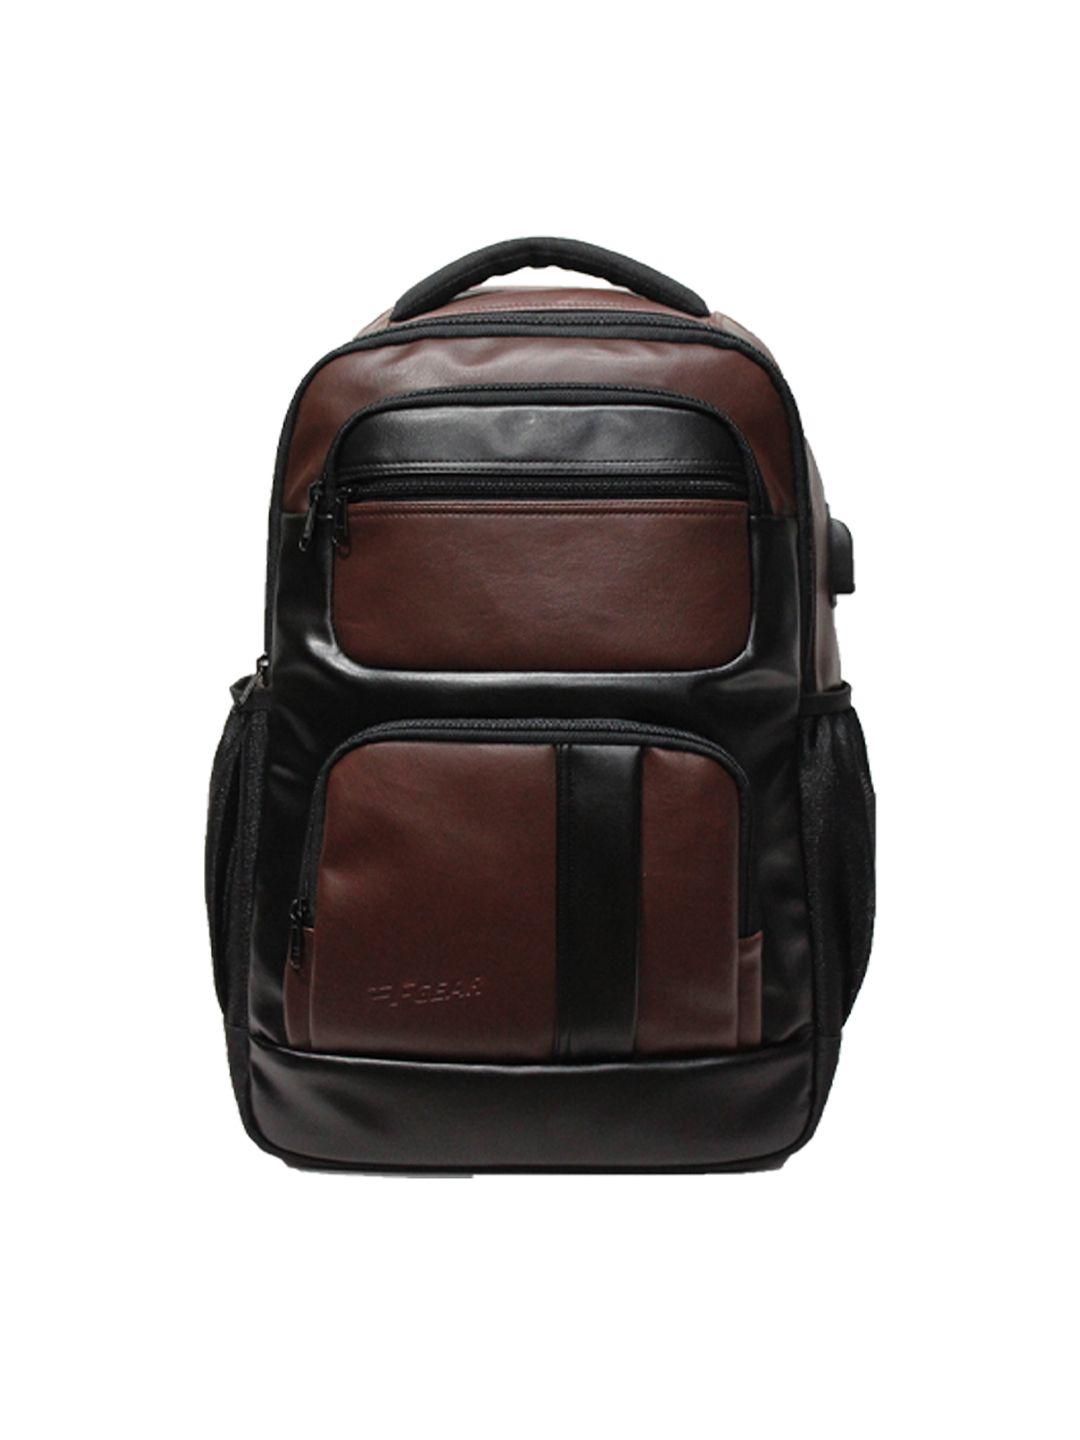 f gear unisex brown & black solid backpack